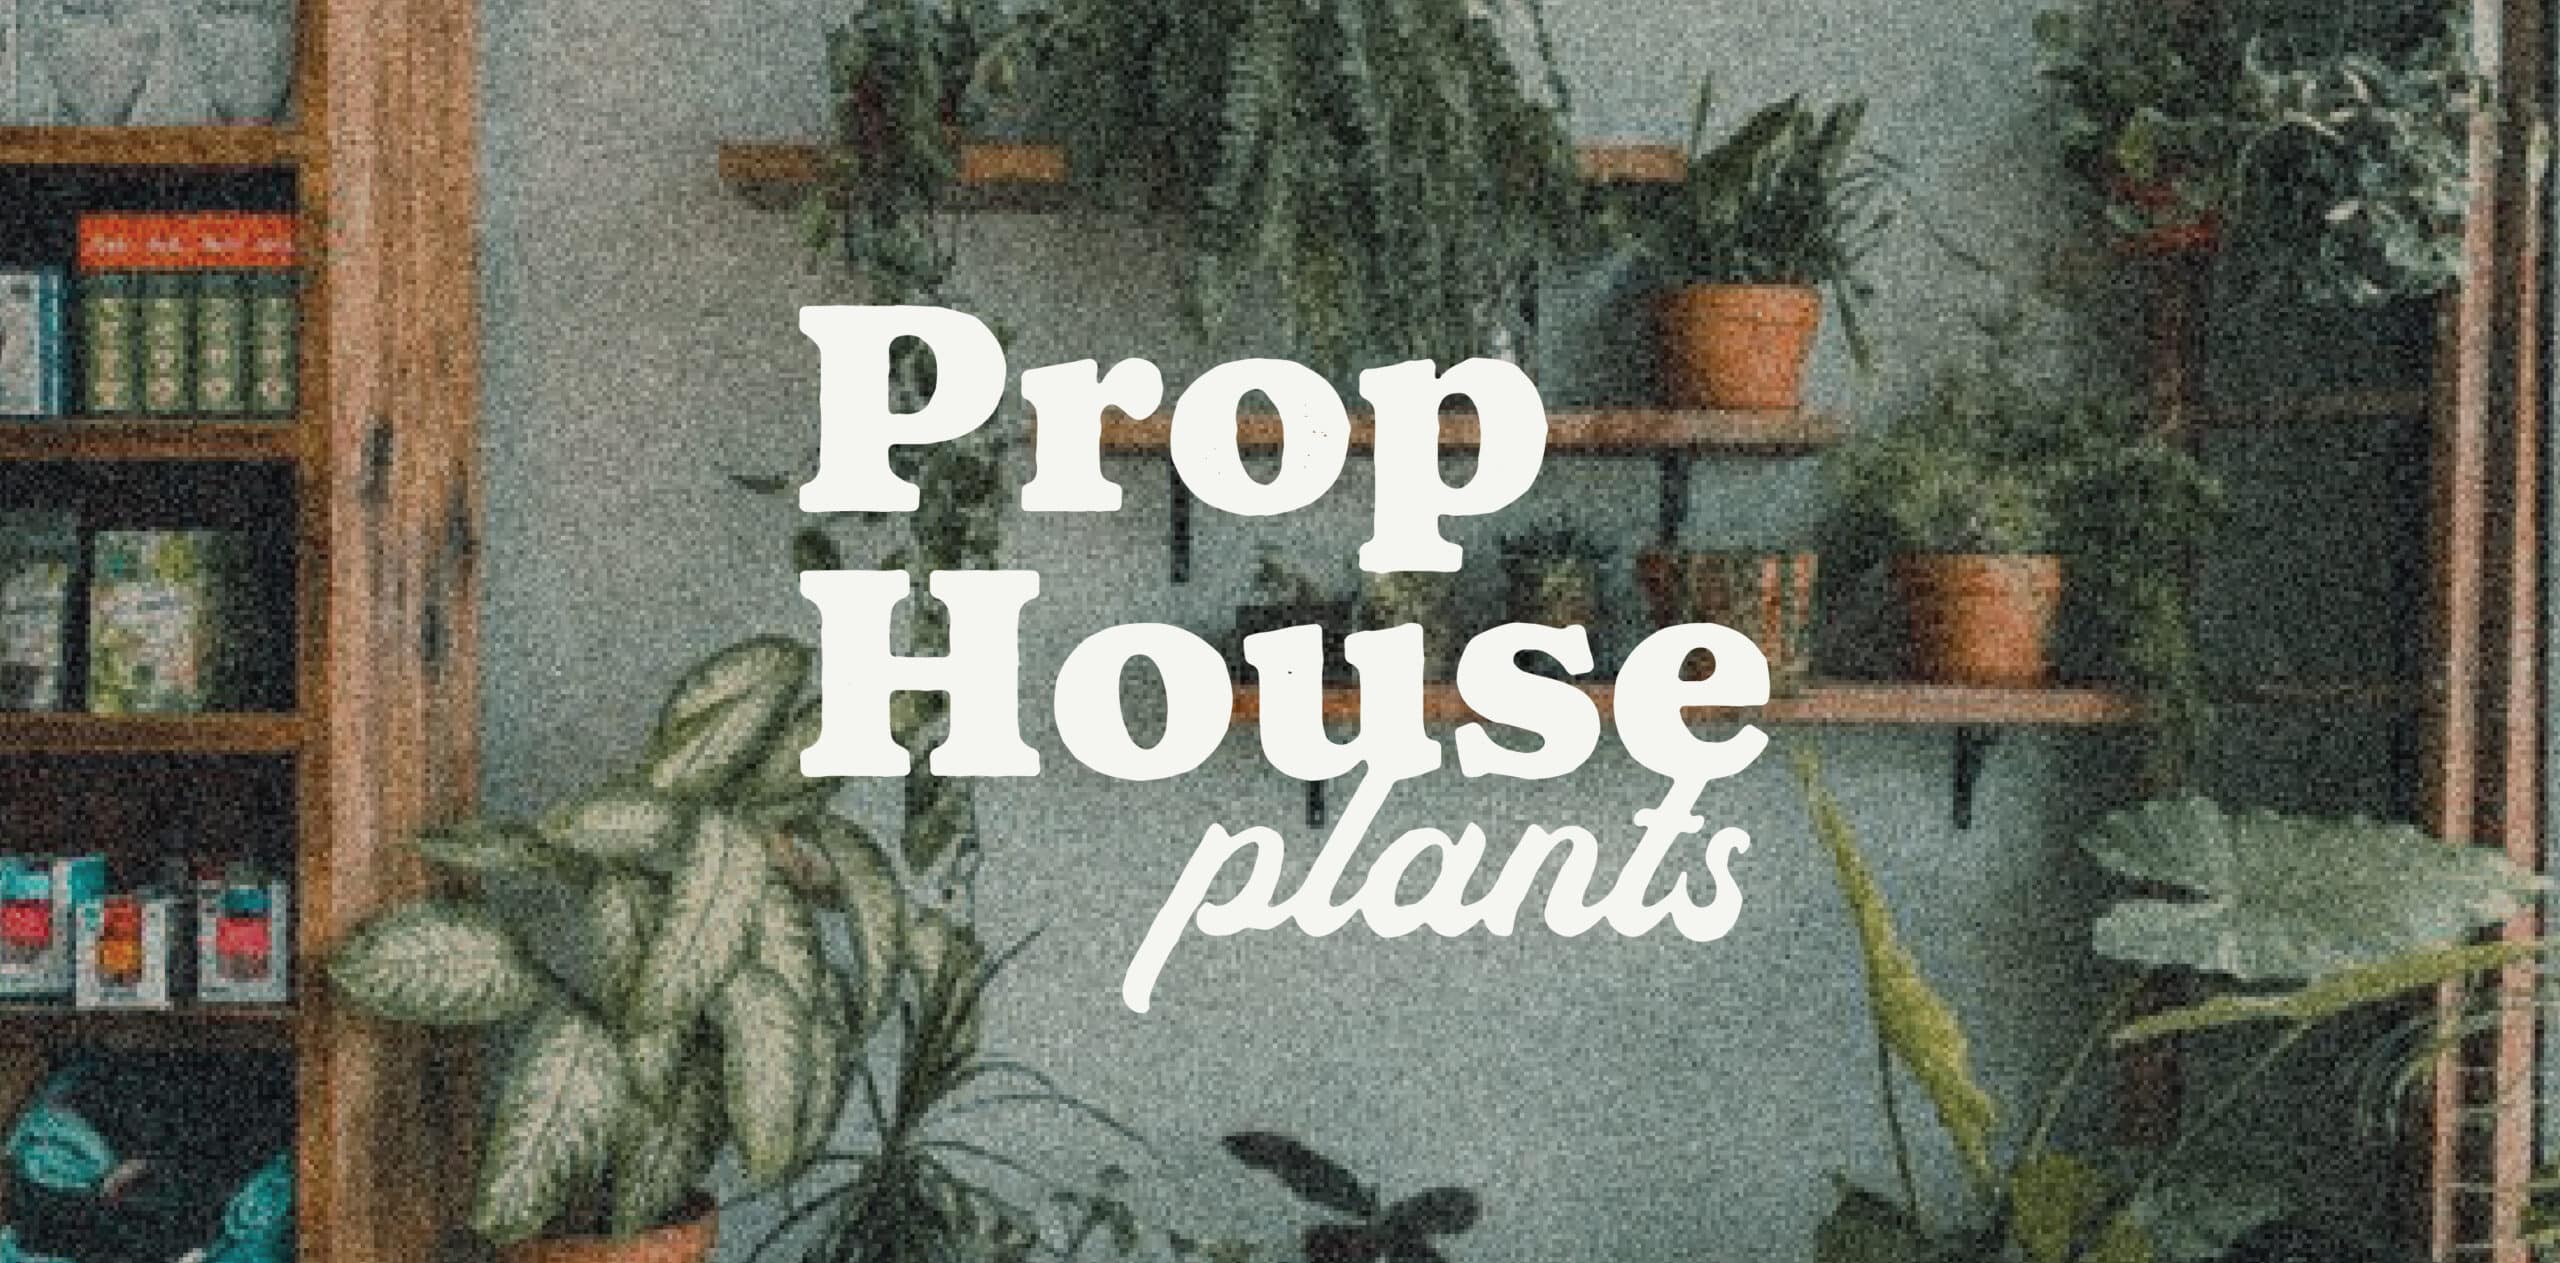 Prop House Plants in San Pedro California Logo Design by Stellen Design branding agency in Los Angeles specializing in plant logos